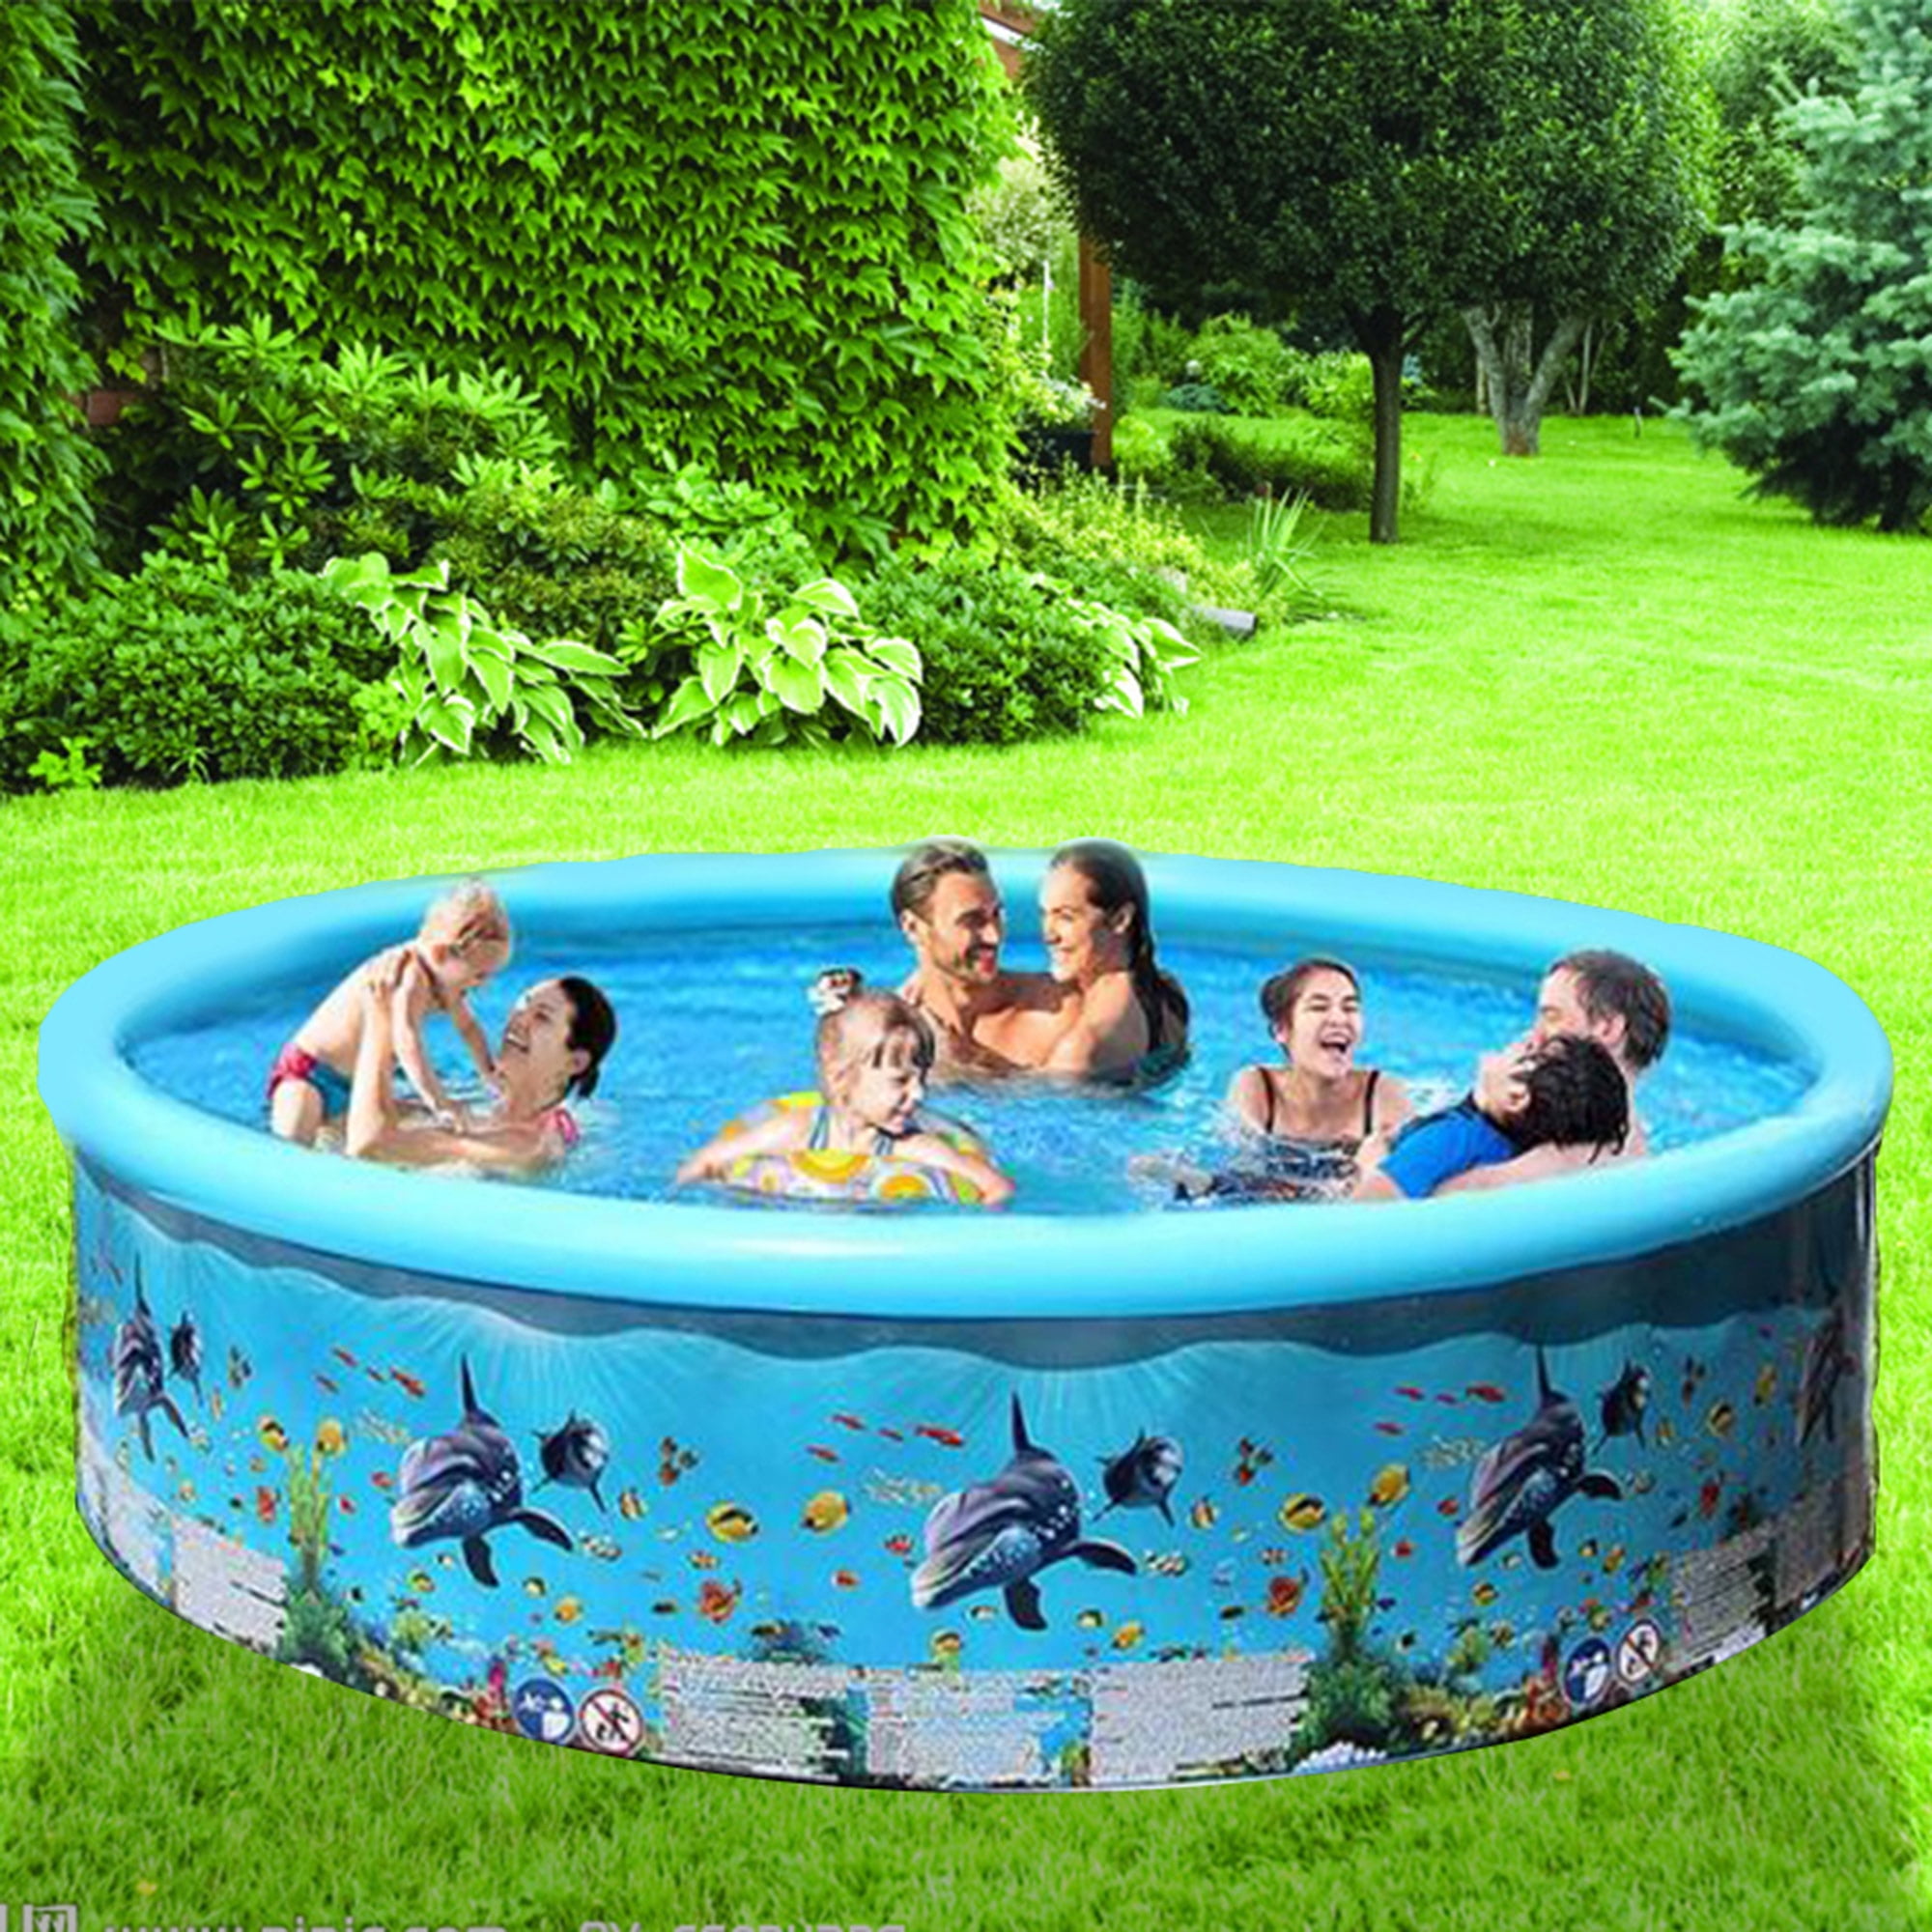 Inflatable Family Swimming Pool Summer Lounge Kids Child Water Play Fun Backyard 